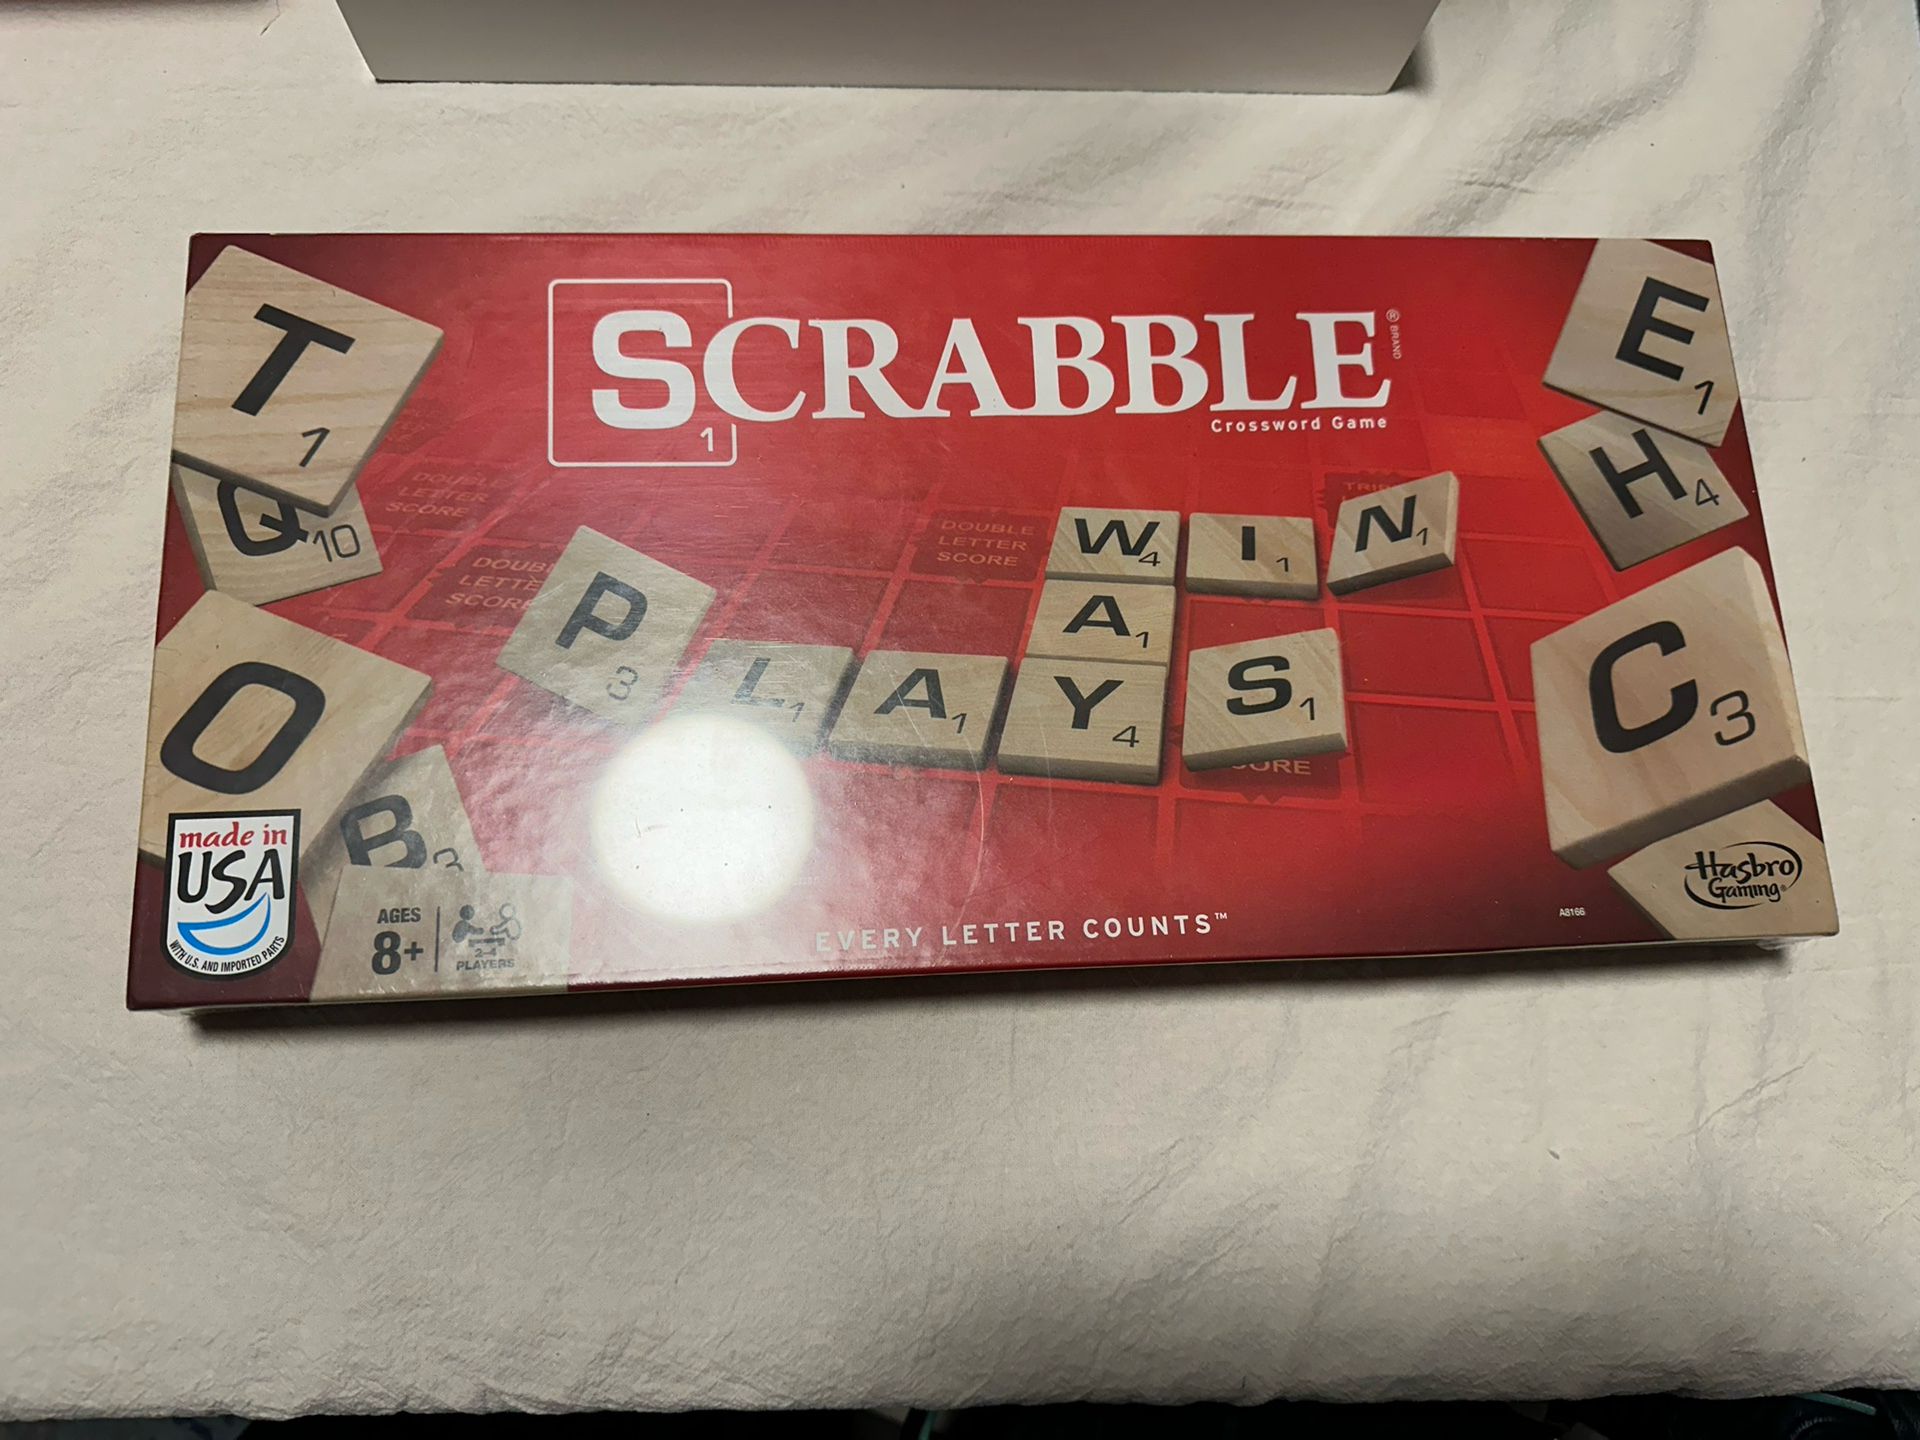 Brand New Scrabble - Family Game!